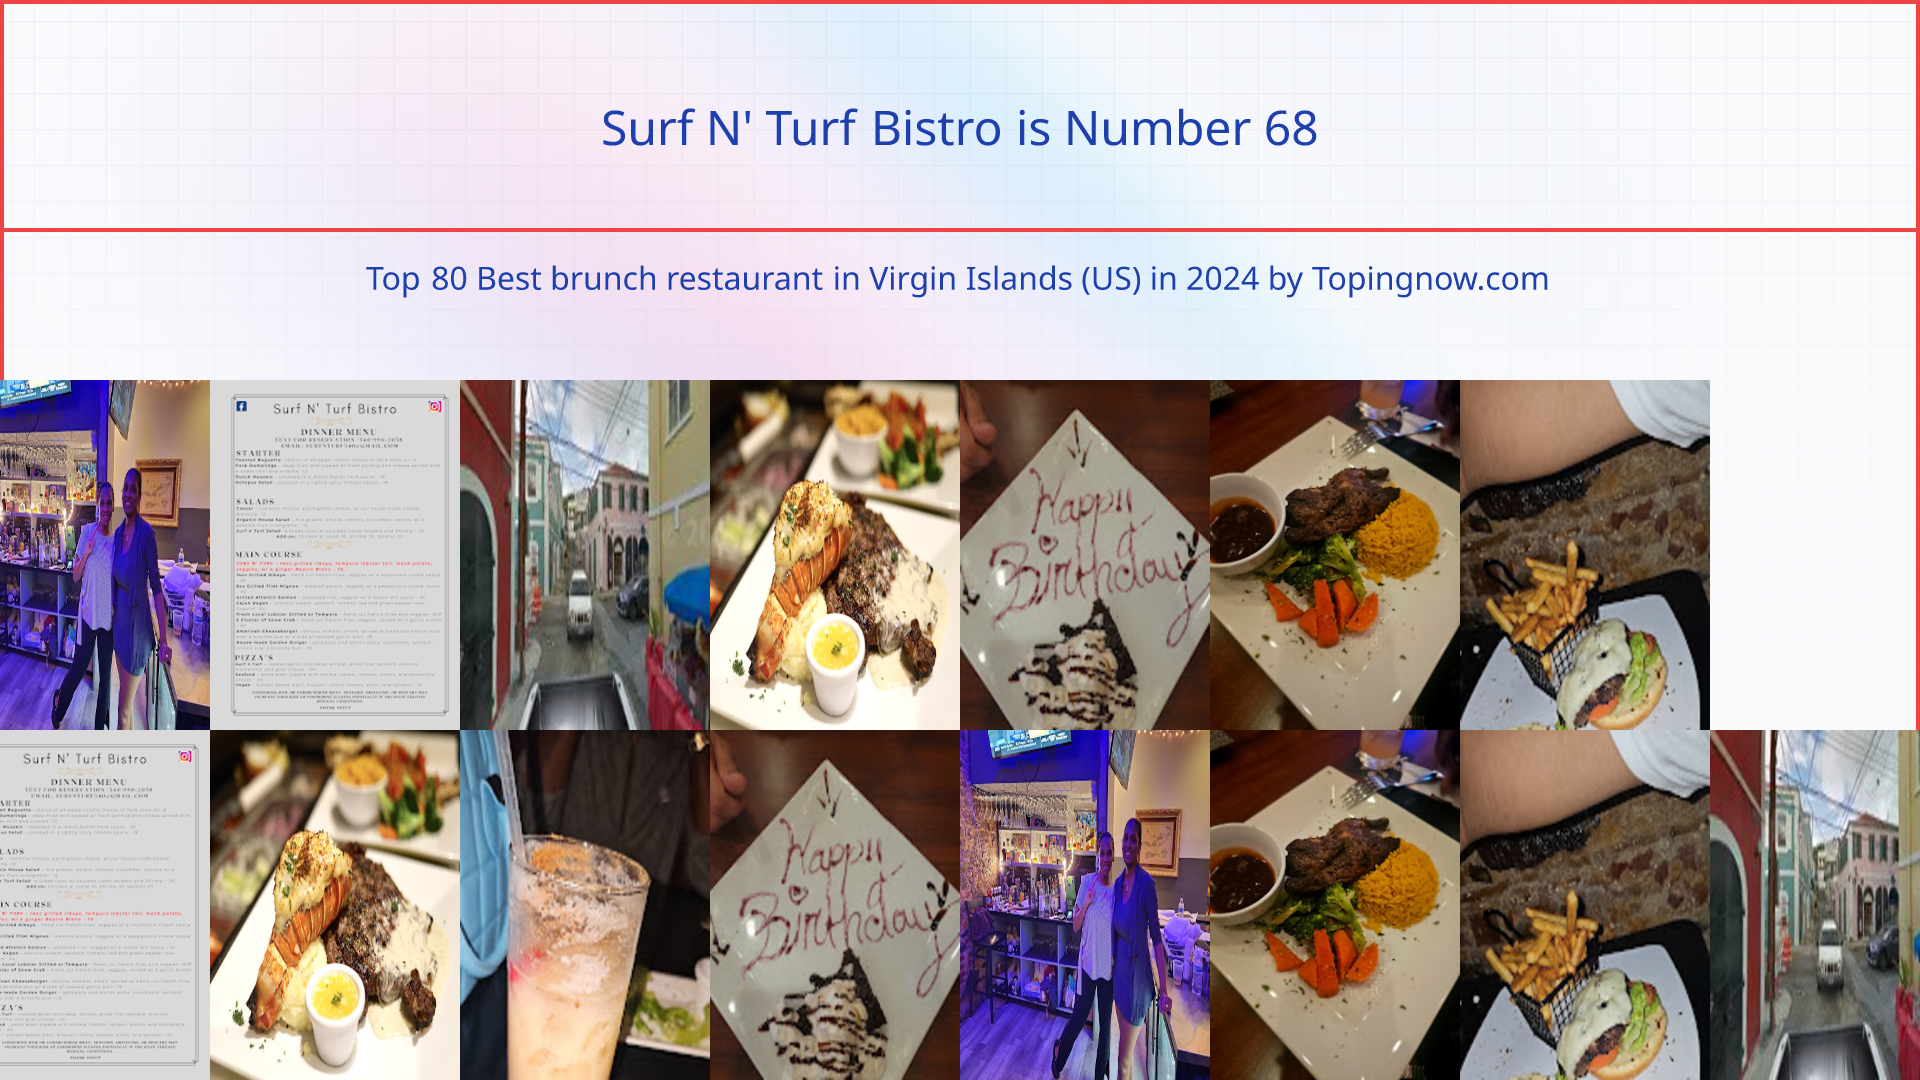 Surf N' Turf Bistro: Top 80 Best brunch restaurant in Virgin Islands (US) in 2024